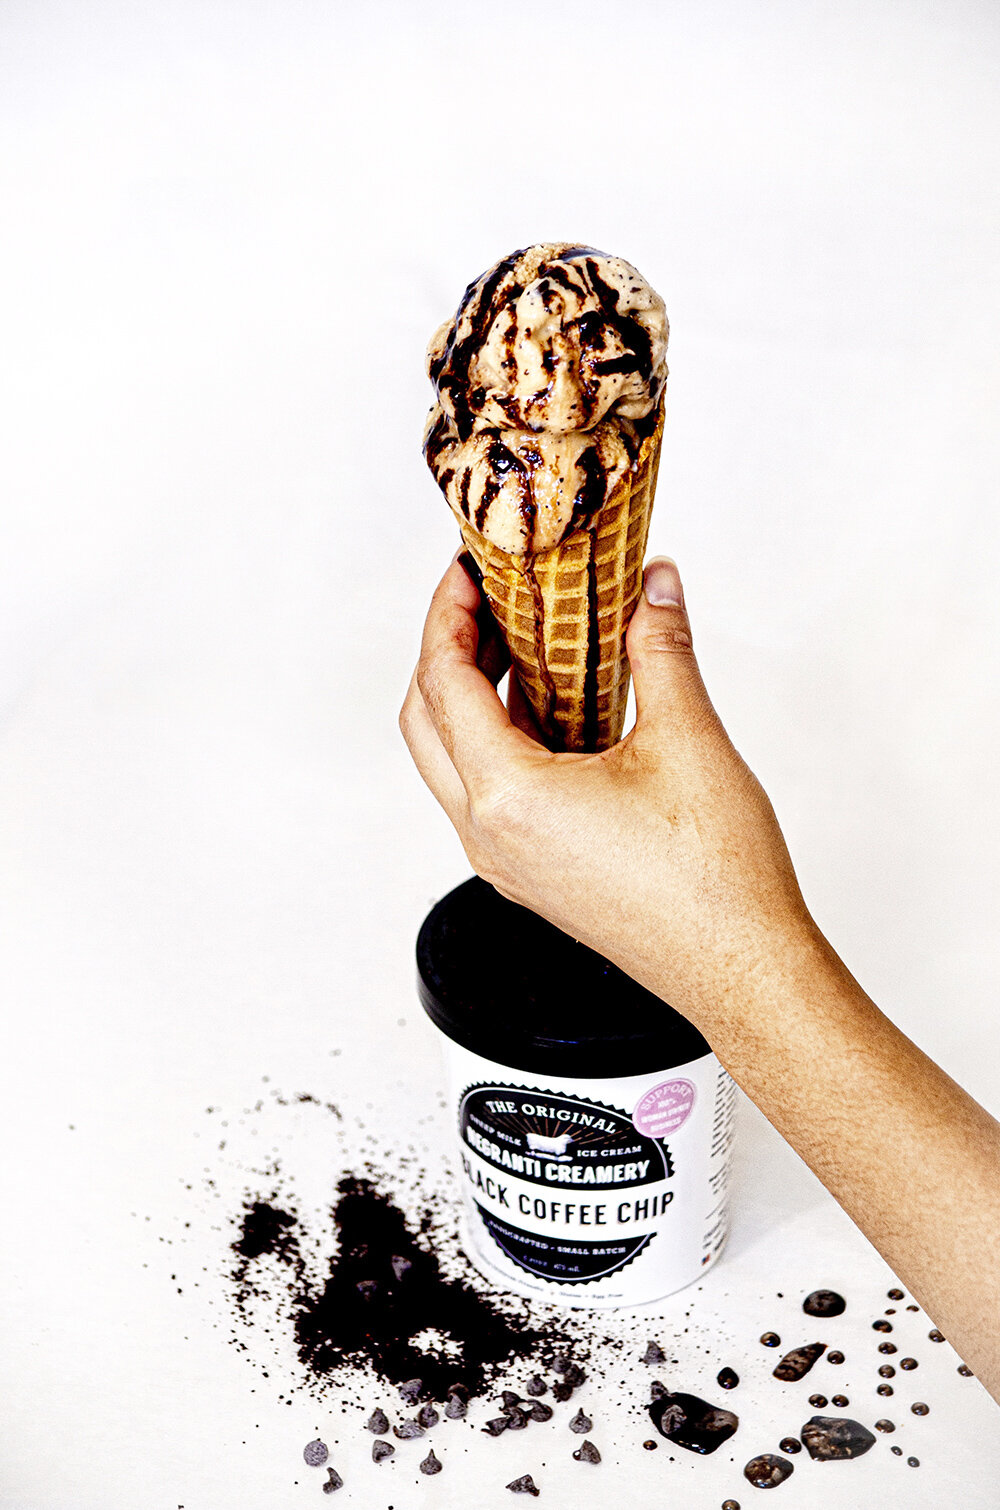 Negranti Creamery-Black Coffee Chip-Cone and Pint.jpg